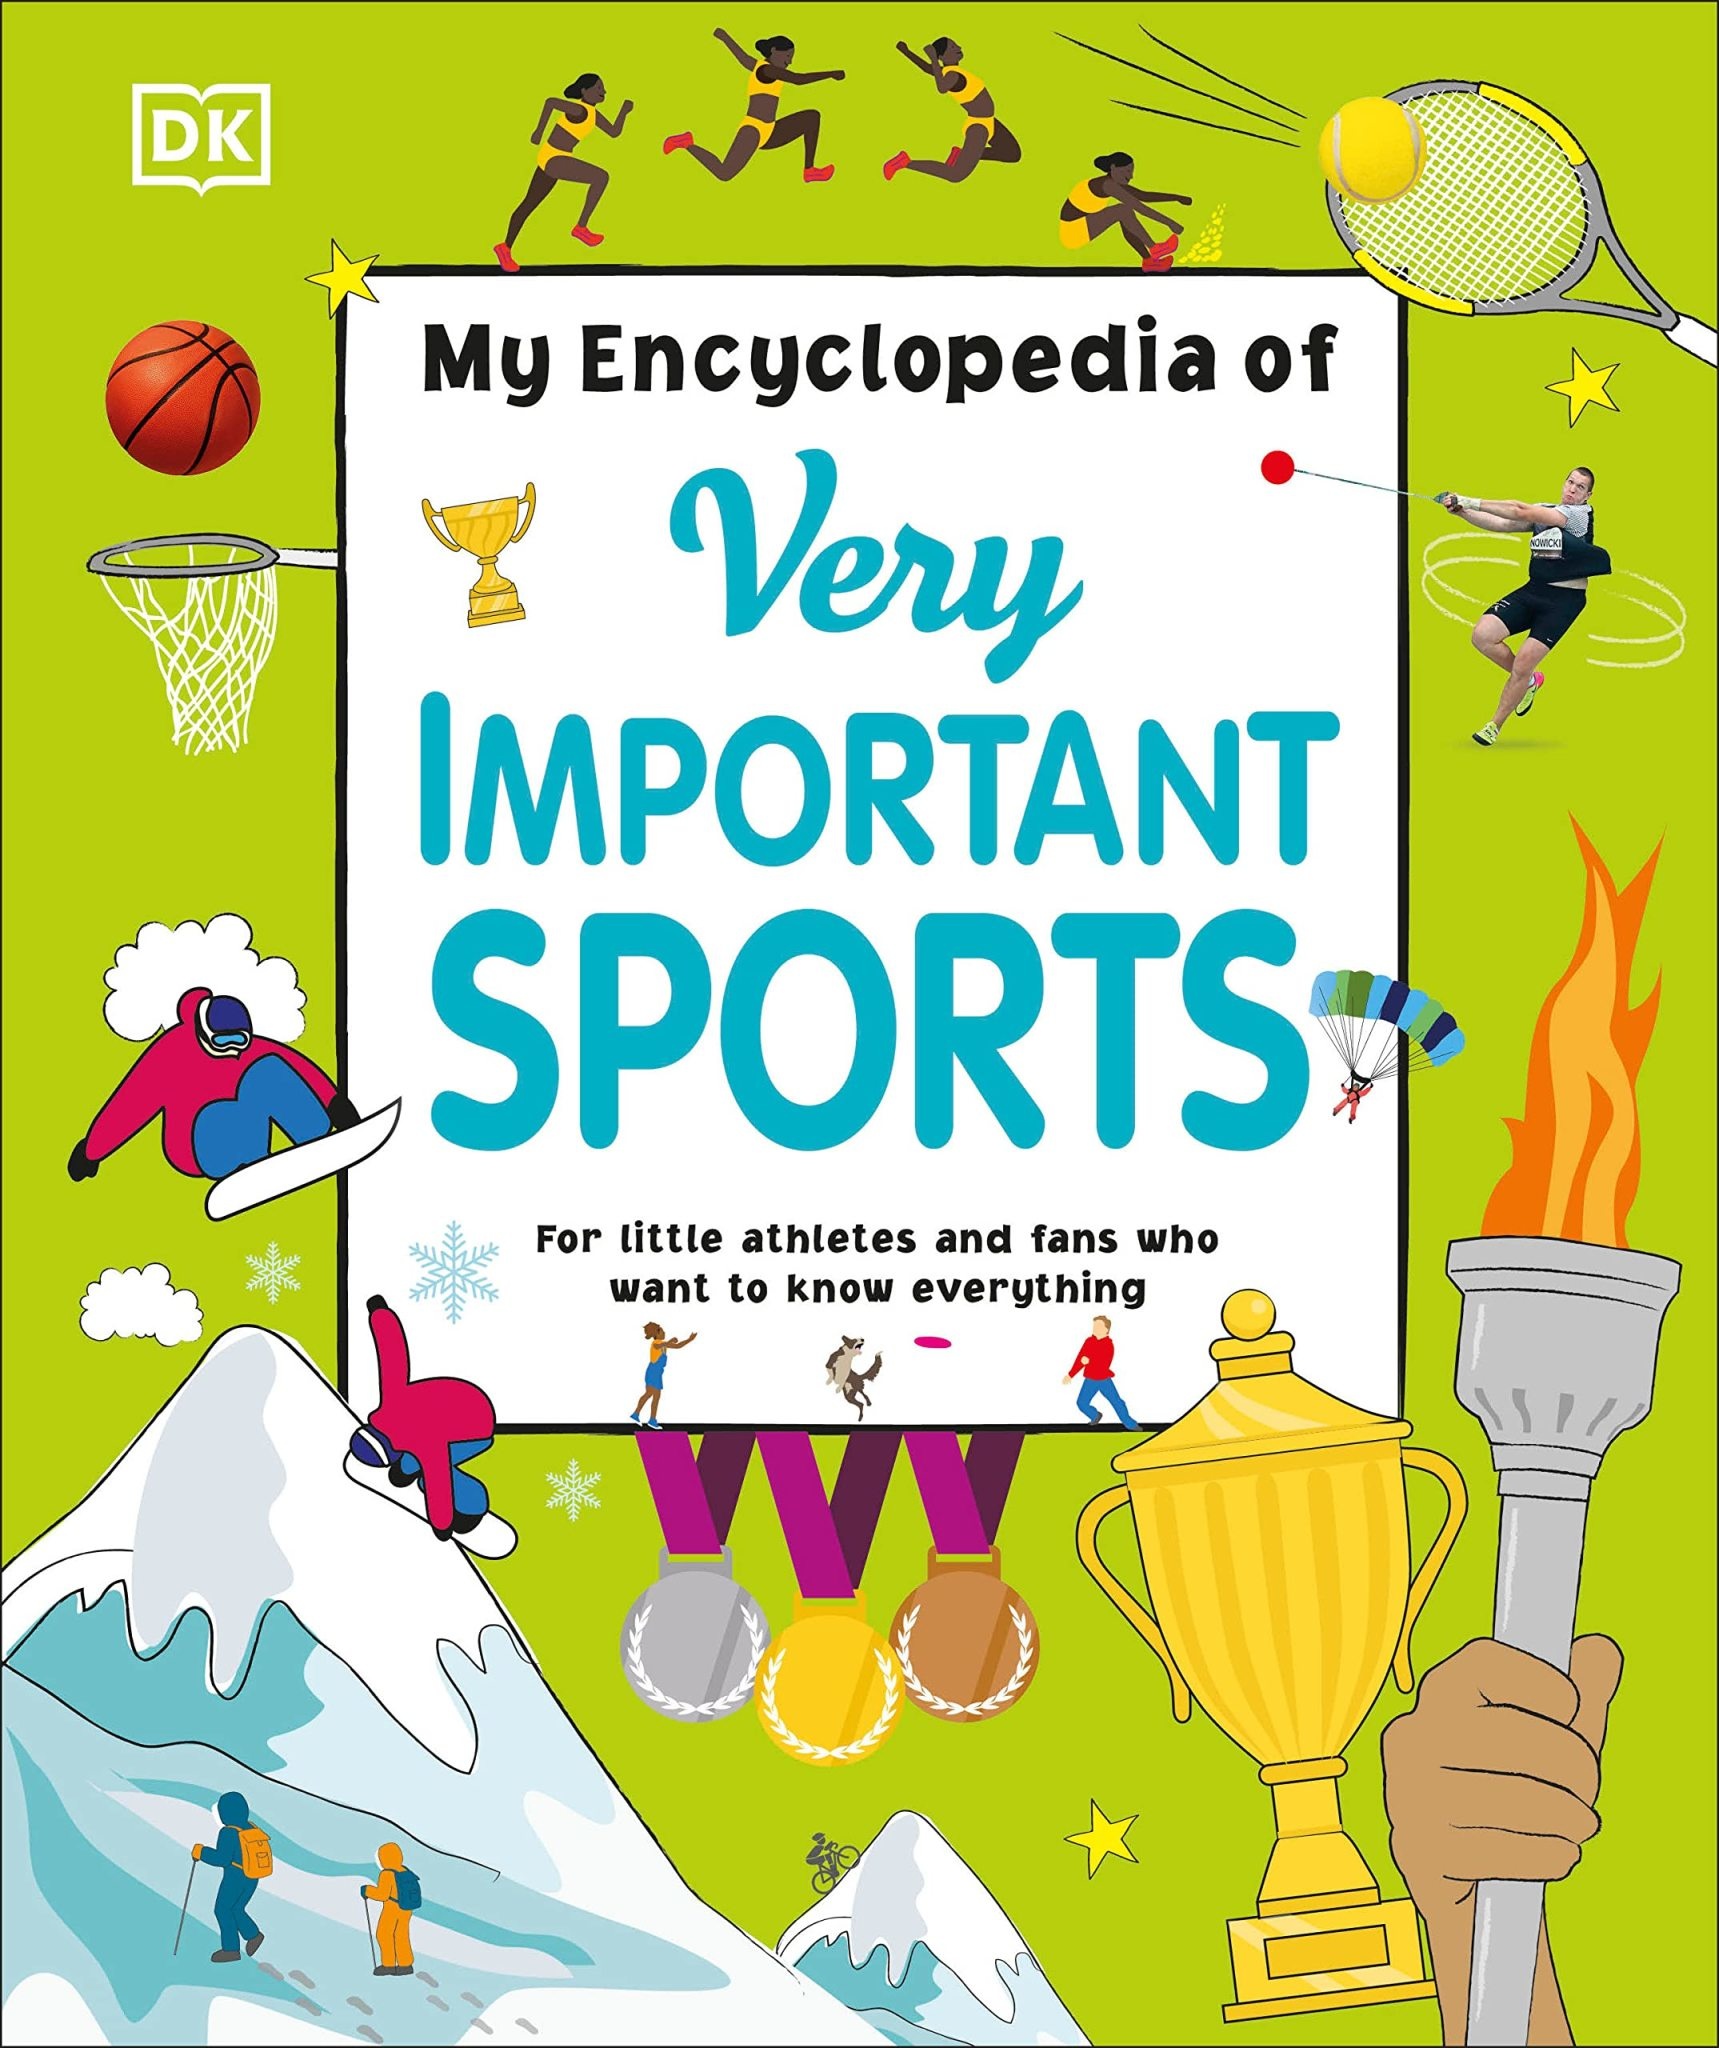 DK DK My Encyclopedia of Very Important Sports